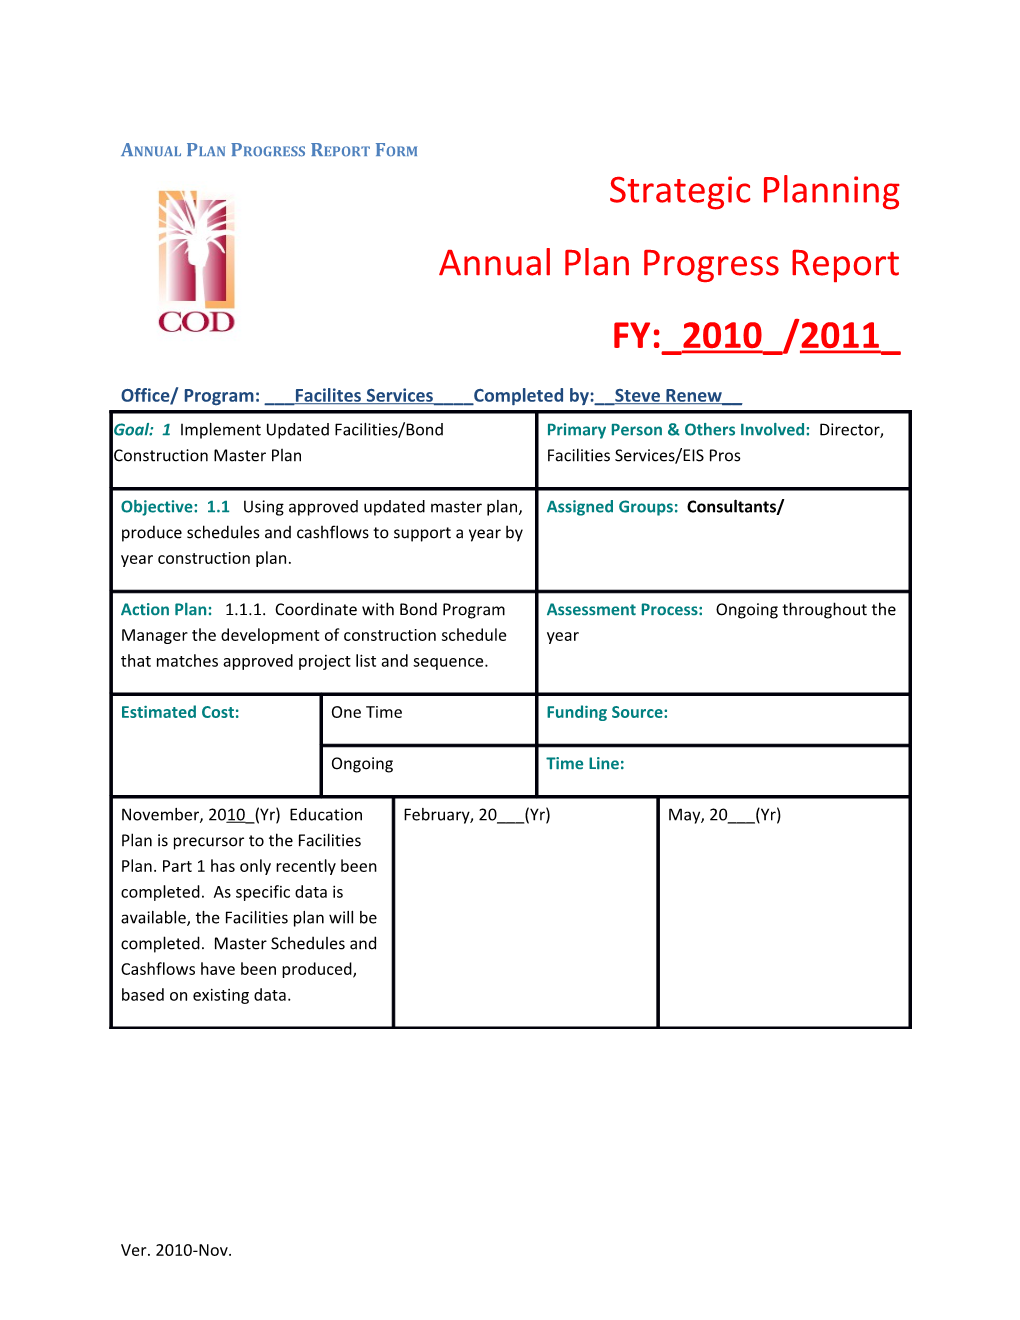 Annual Plan Progress Report Form